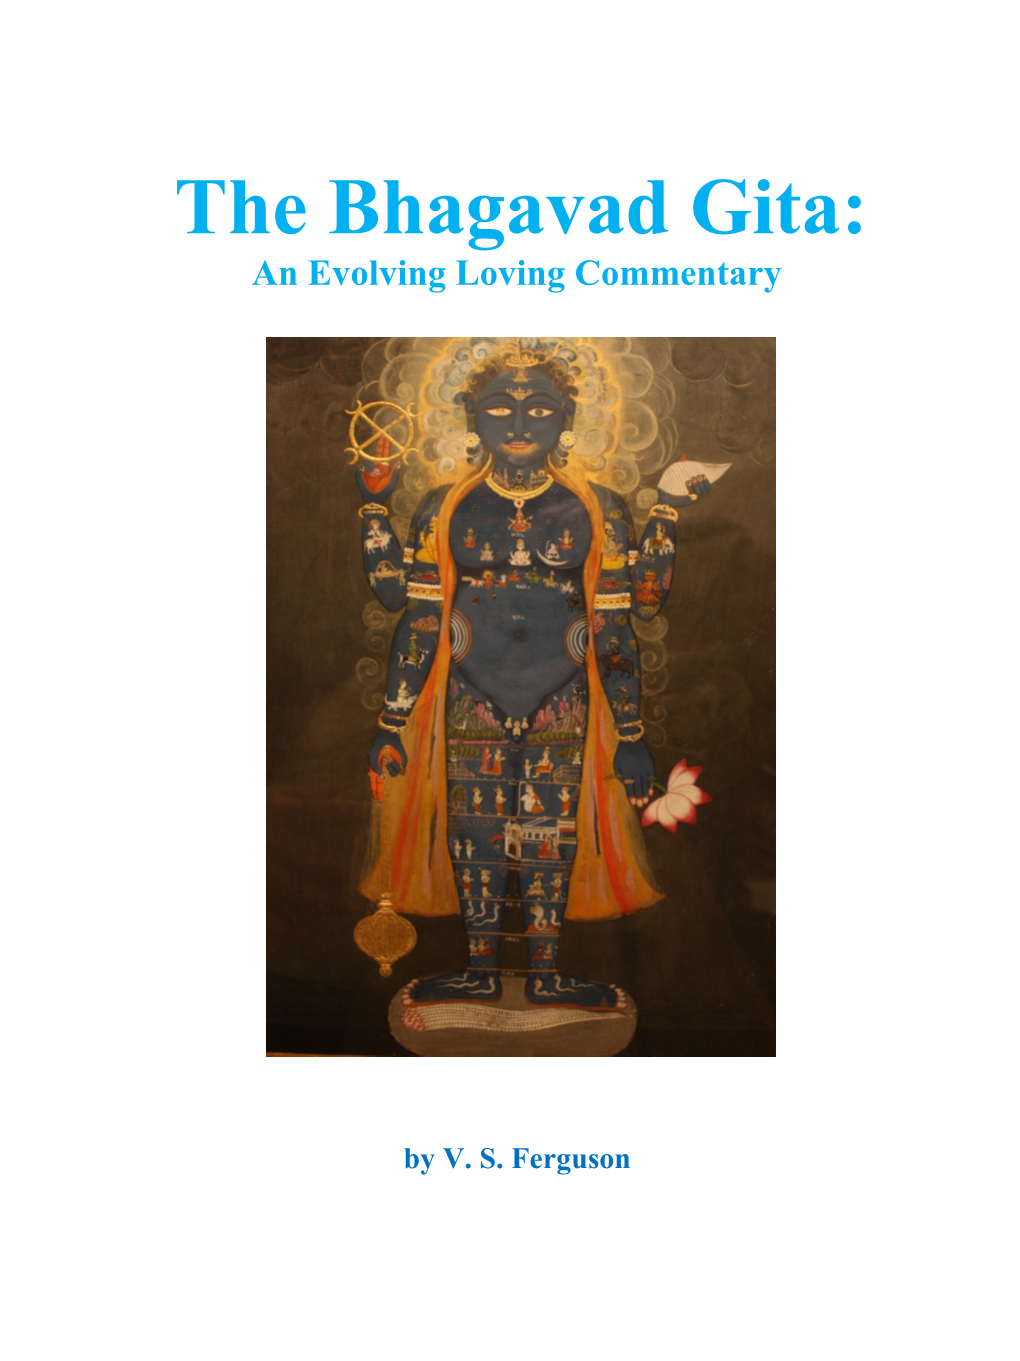 The Bhagavad Gita: an Evolving Loving Commentary